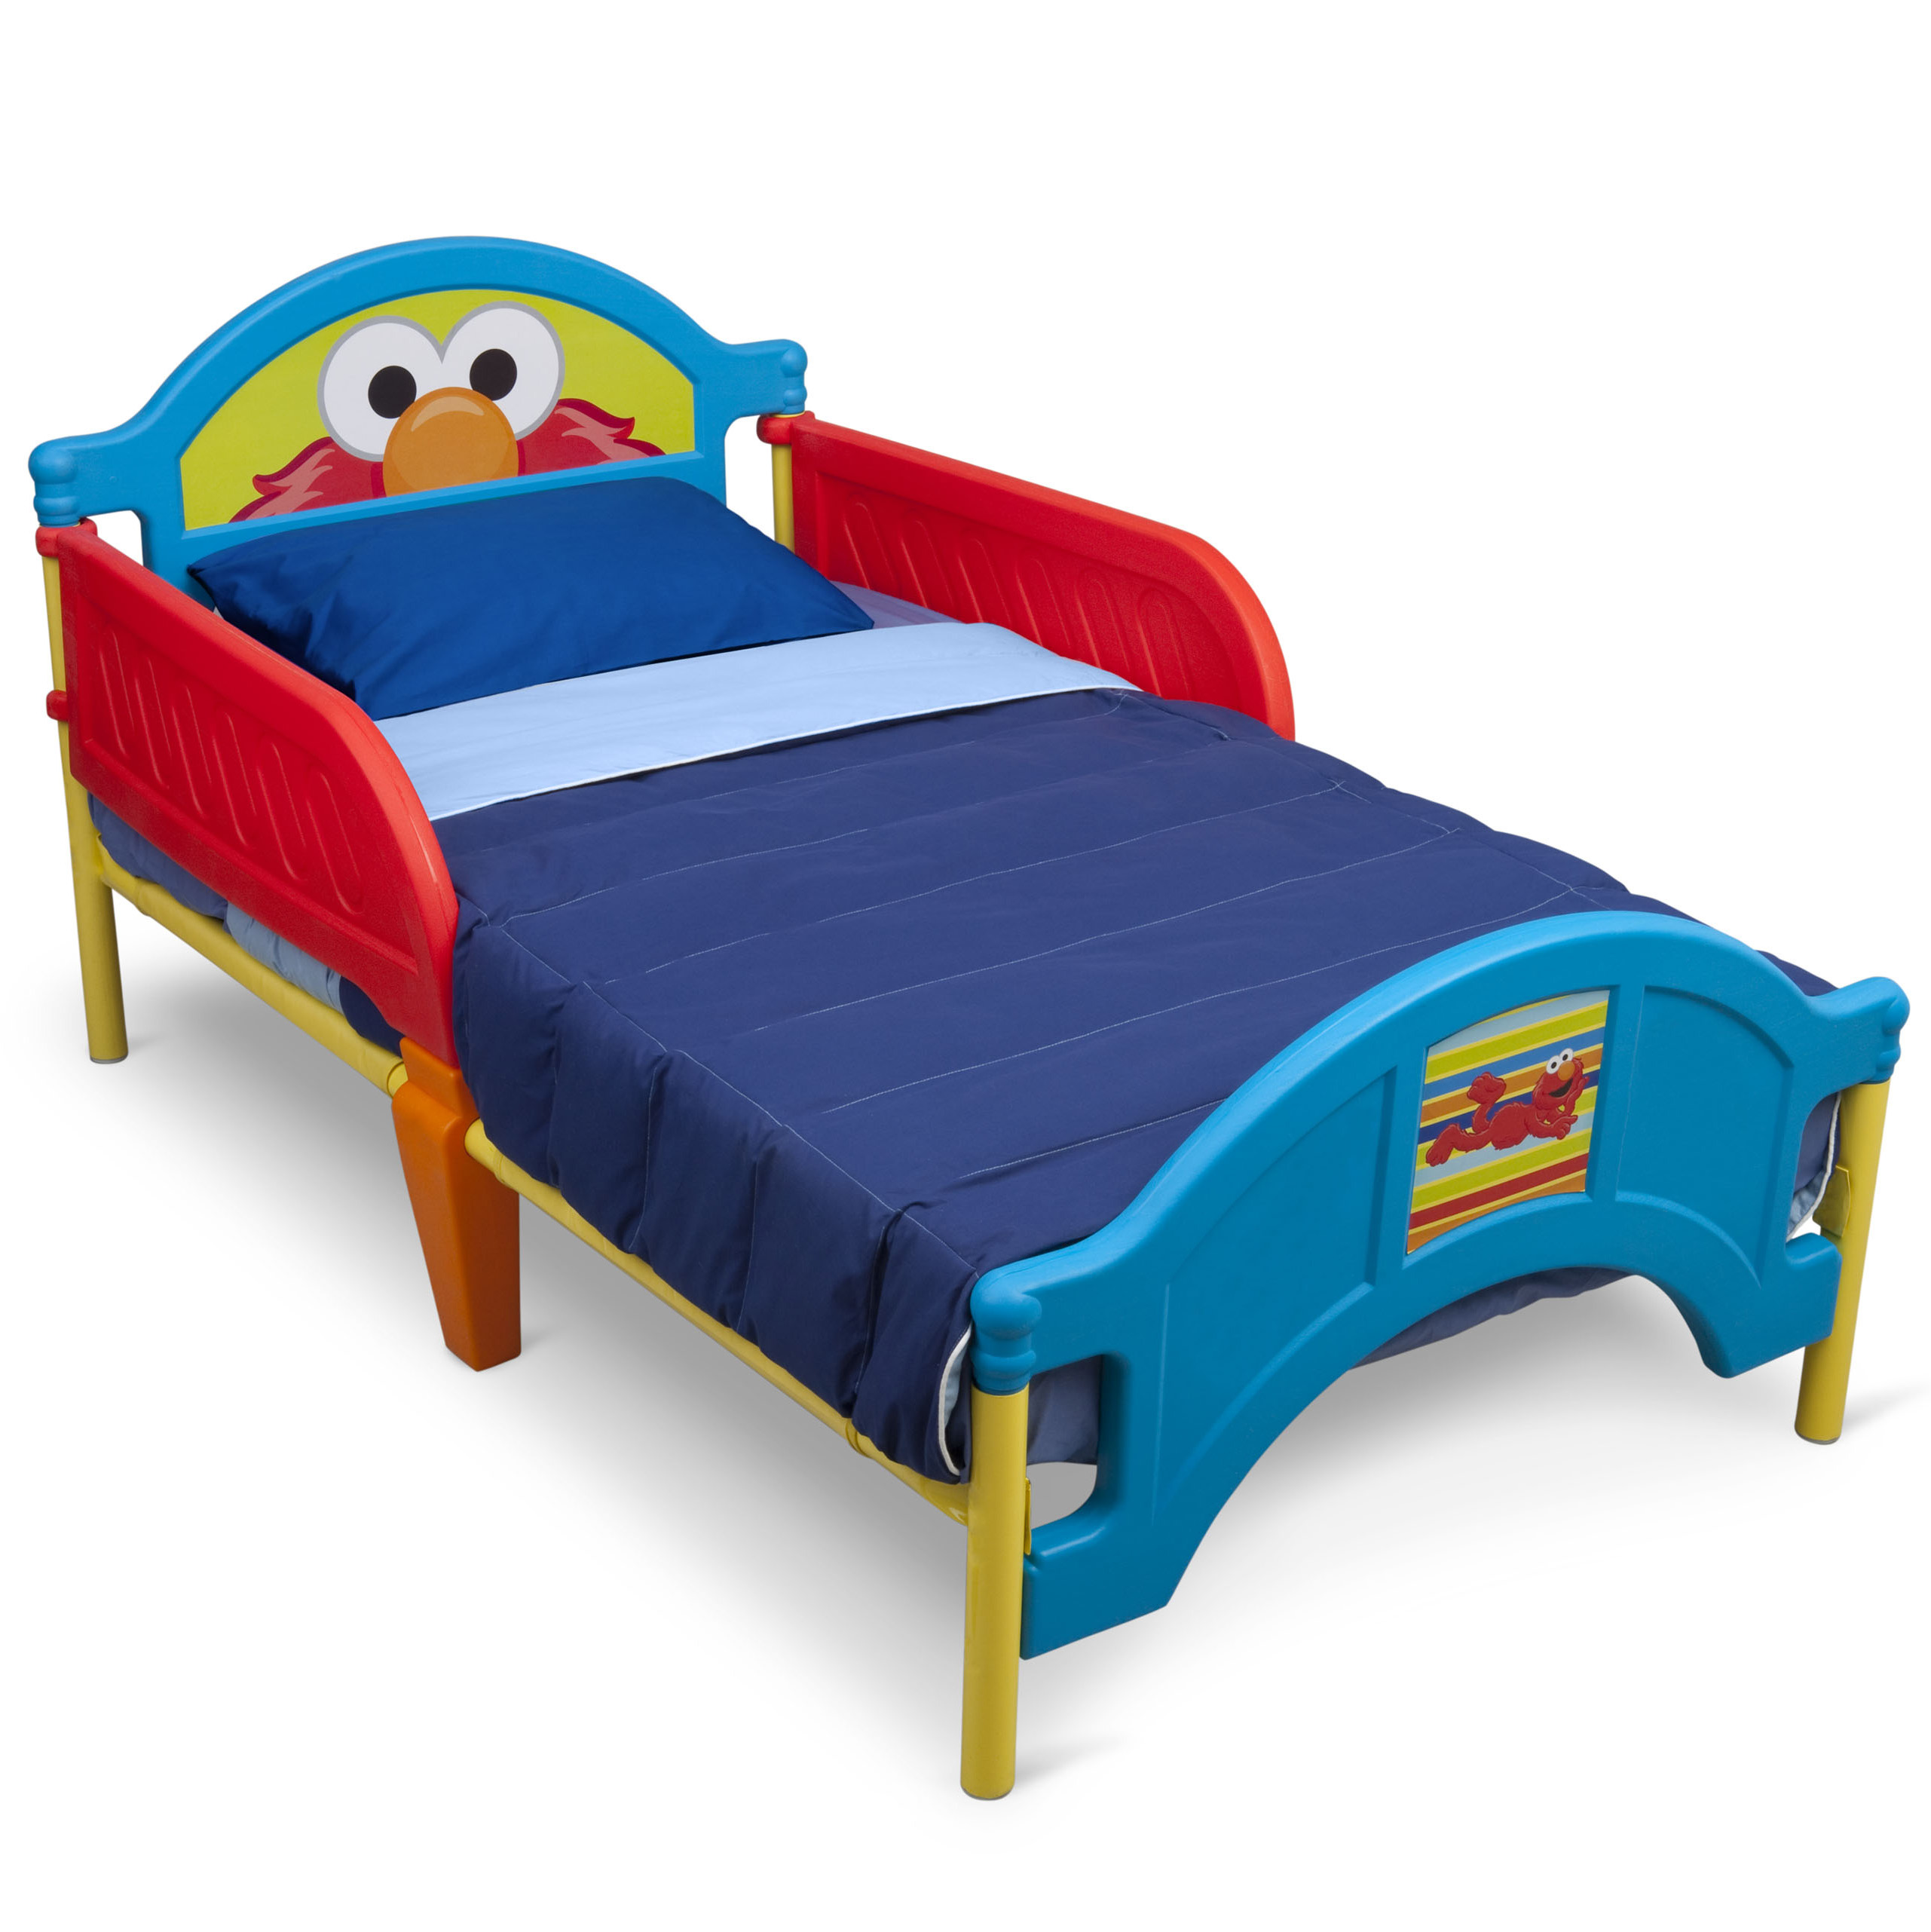 Delta Children Sesame Street Elmo Plastic Toddler Bed, Red and Blue - image 1 of 5